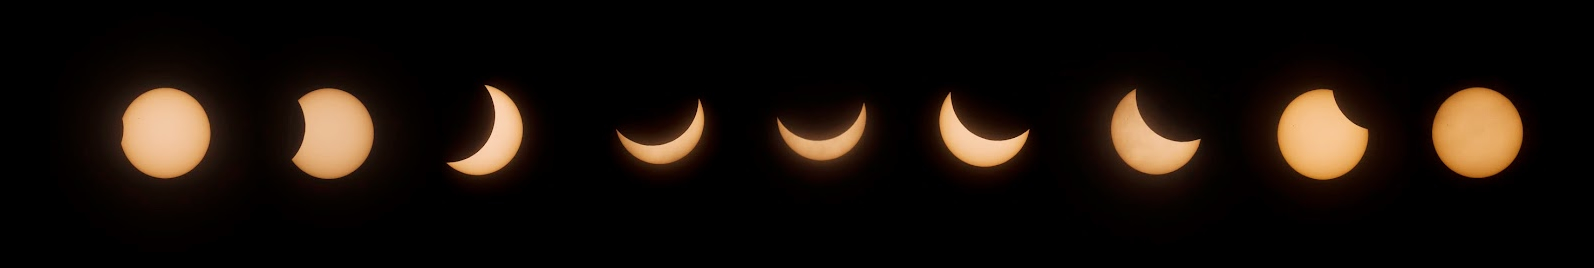 Eclipse de Sol - Observación astronómica - Jornada de puertas abiertas en Rasal (Huesca - España) - Marzo 2015